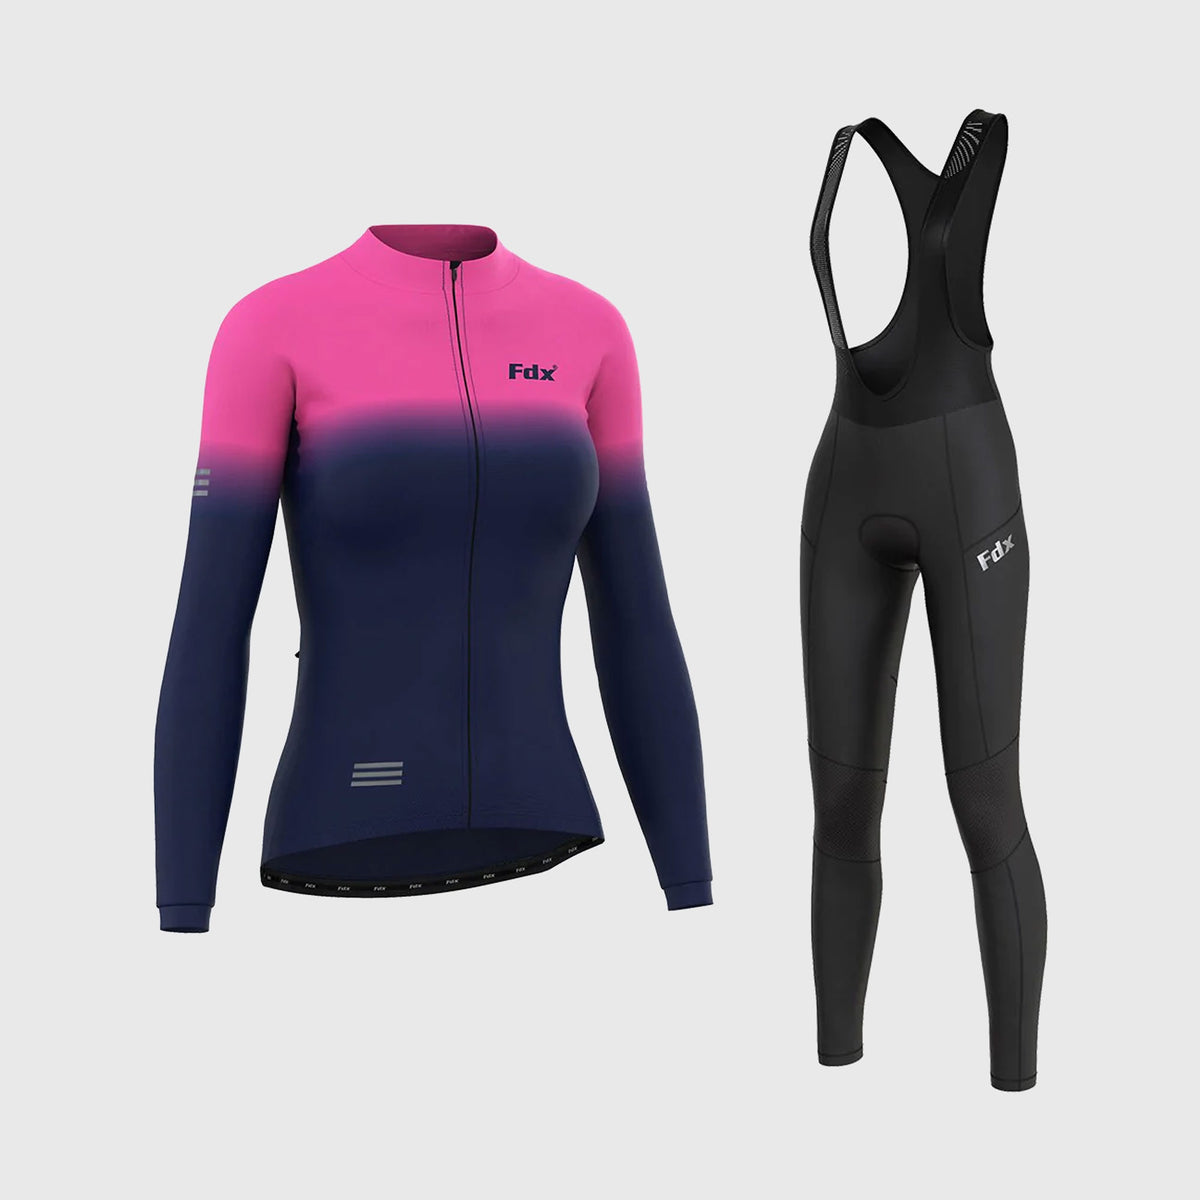 Fdx Women's Duo Pink & Blue Set Winter Cycling Jersey & Bib Tights